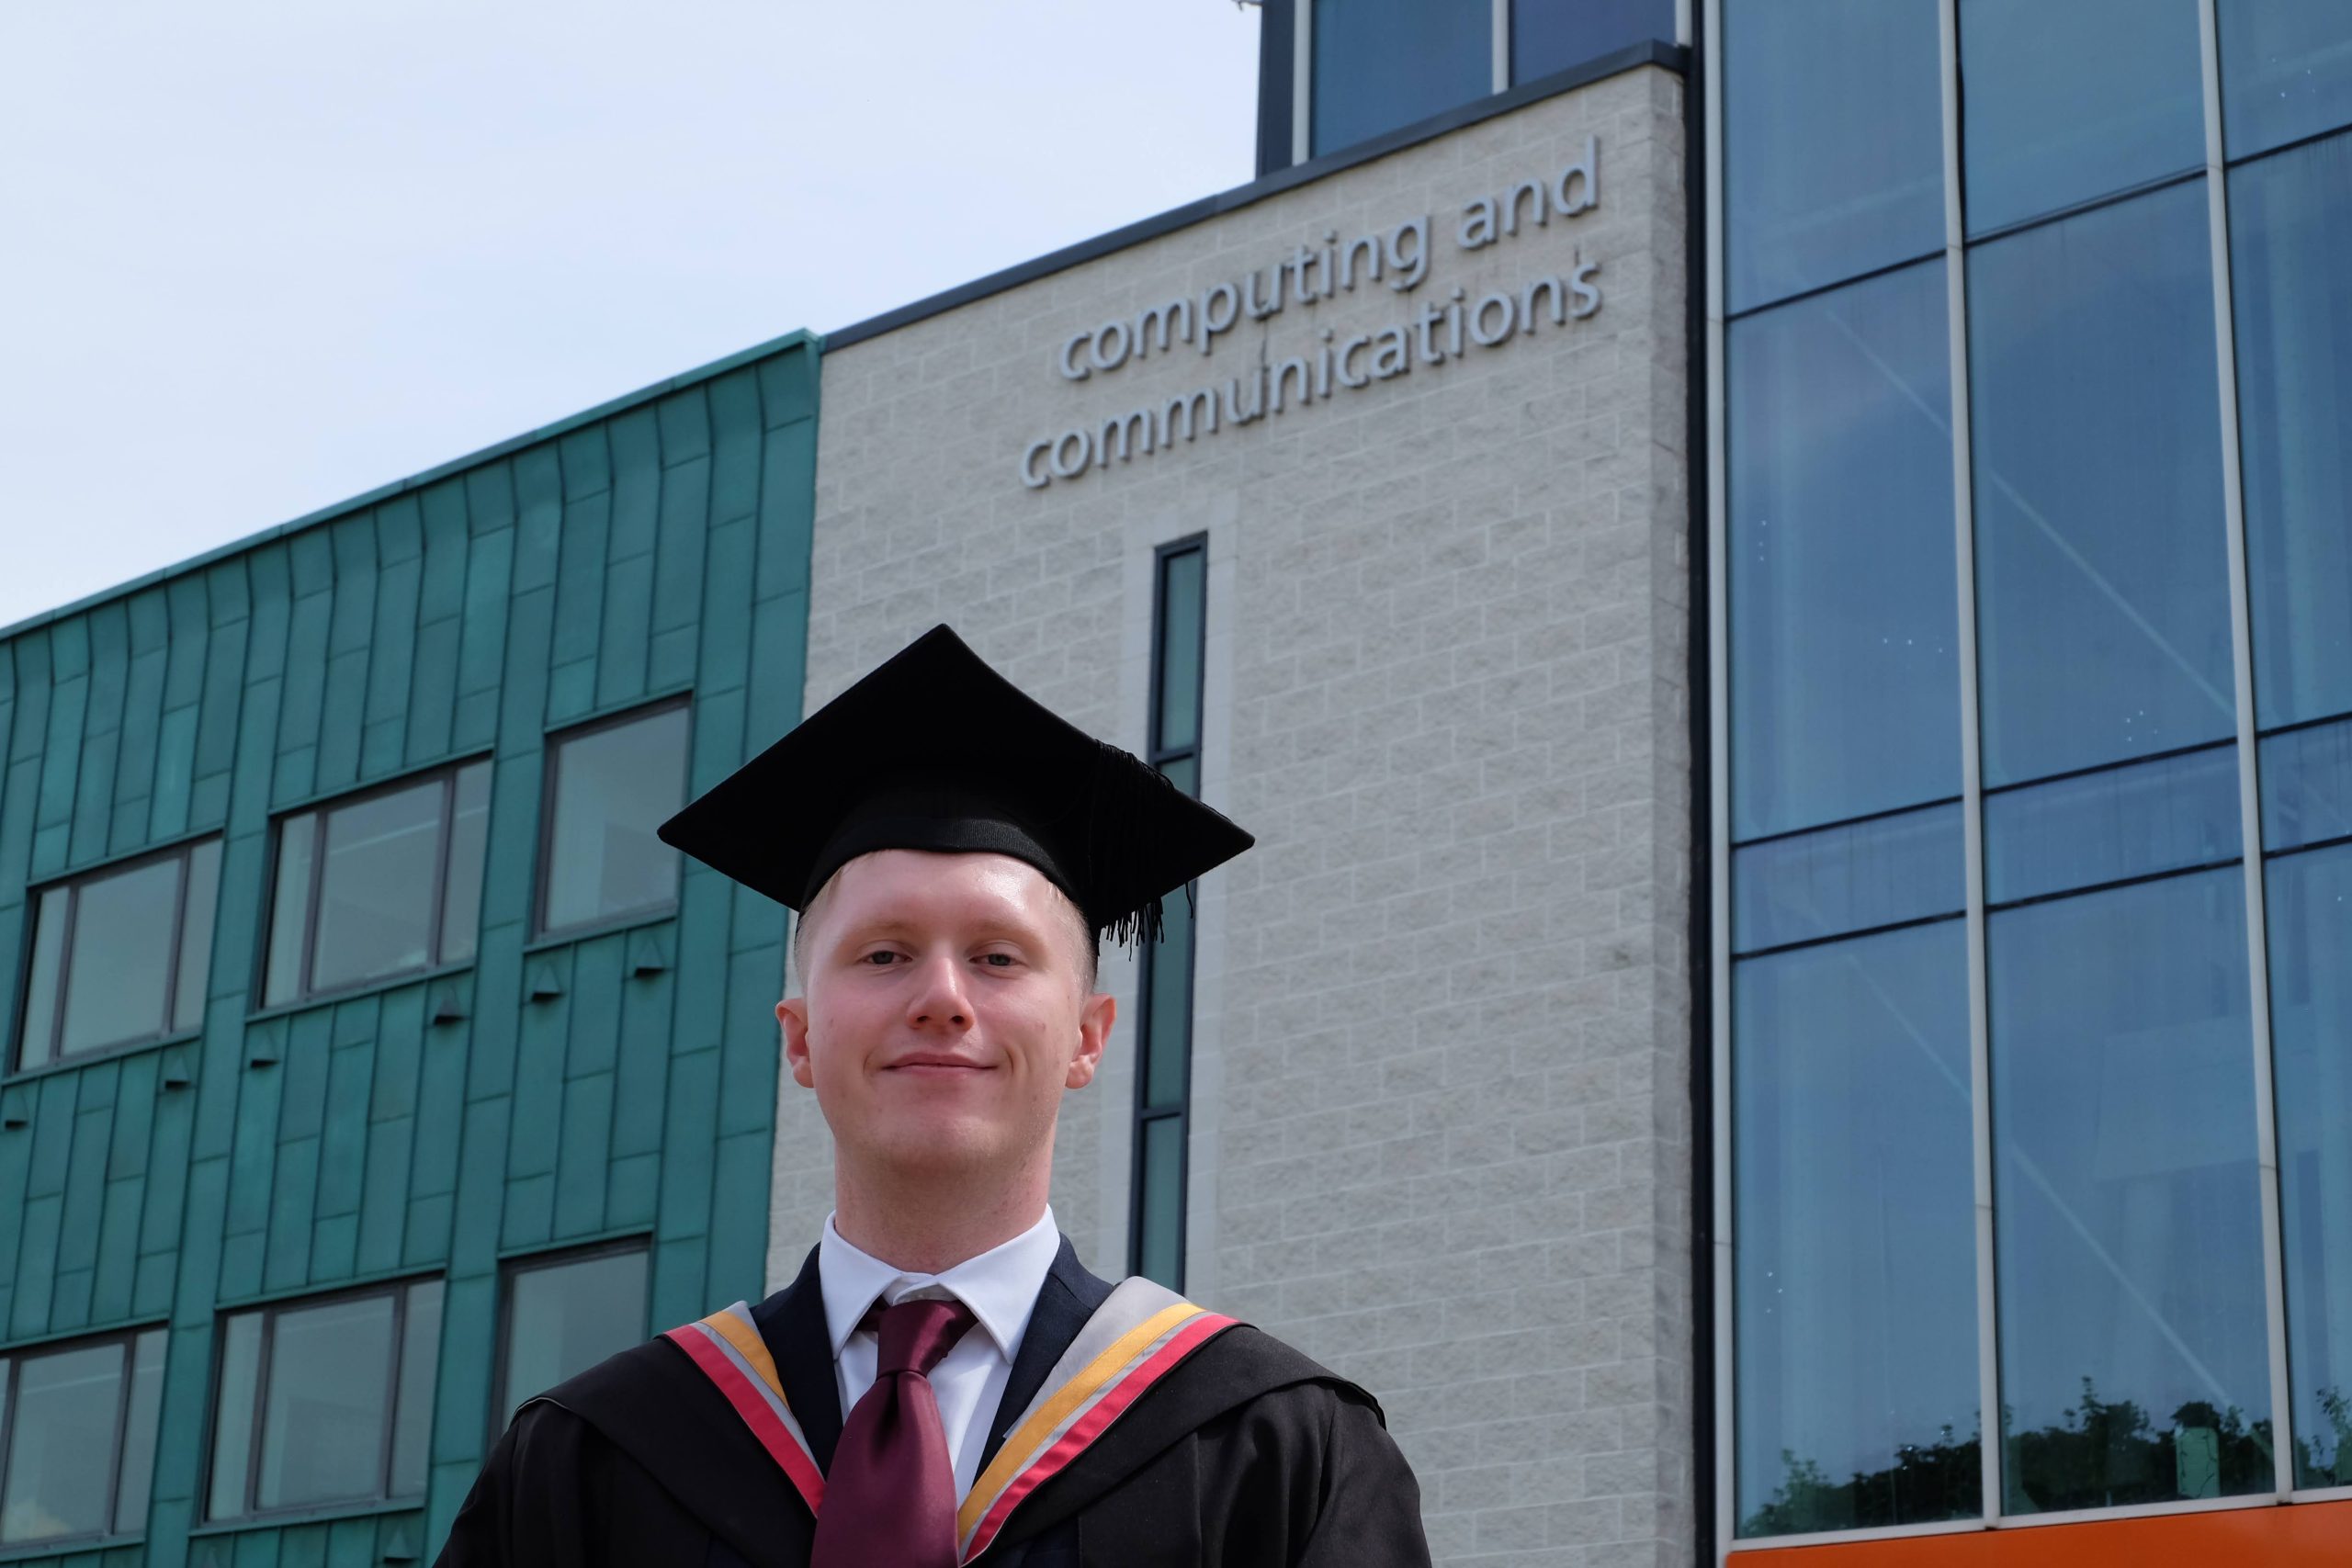 Picture of Luke Halpin in graduation attire outside Lancaster University School of Computing and Communications